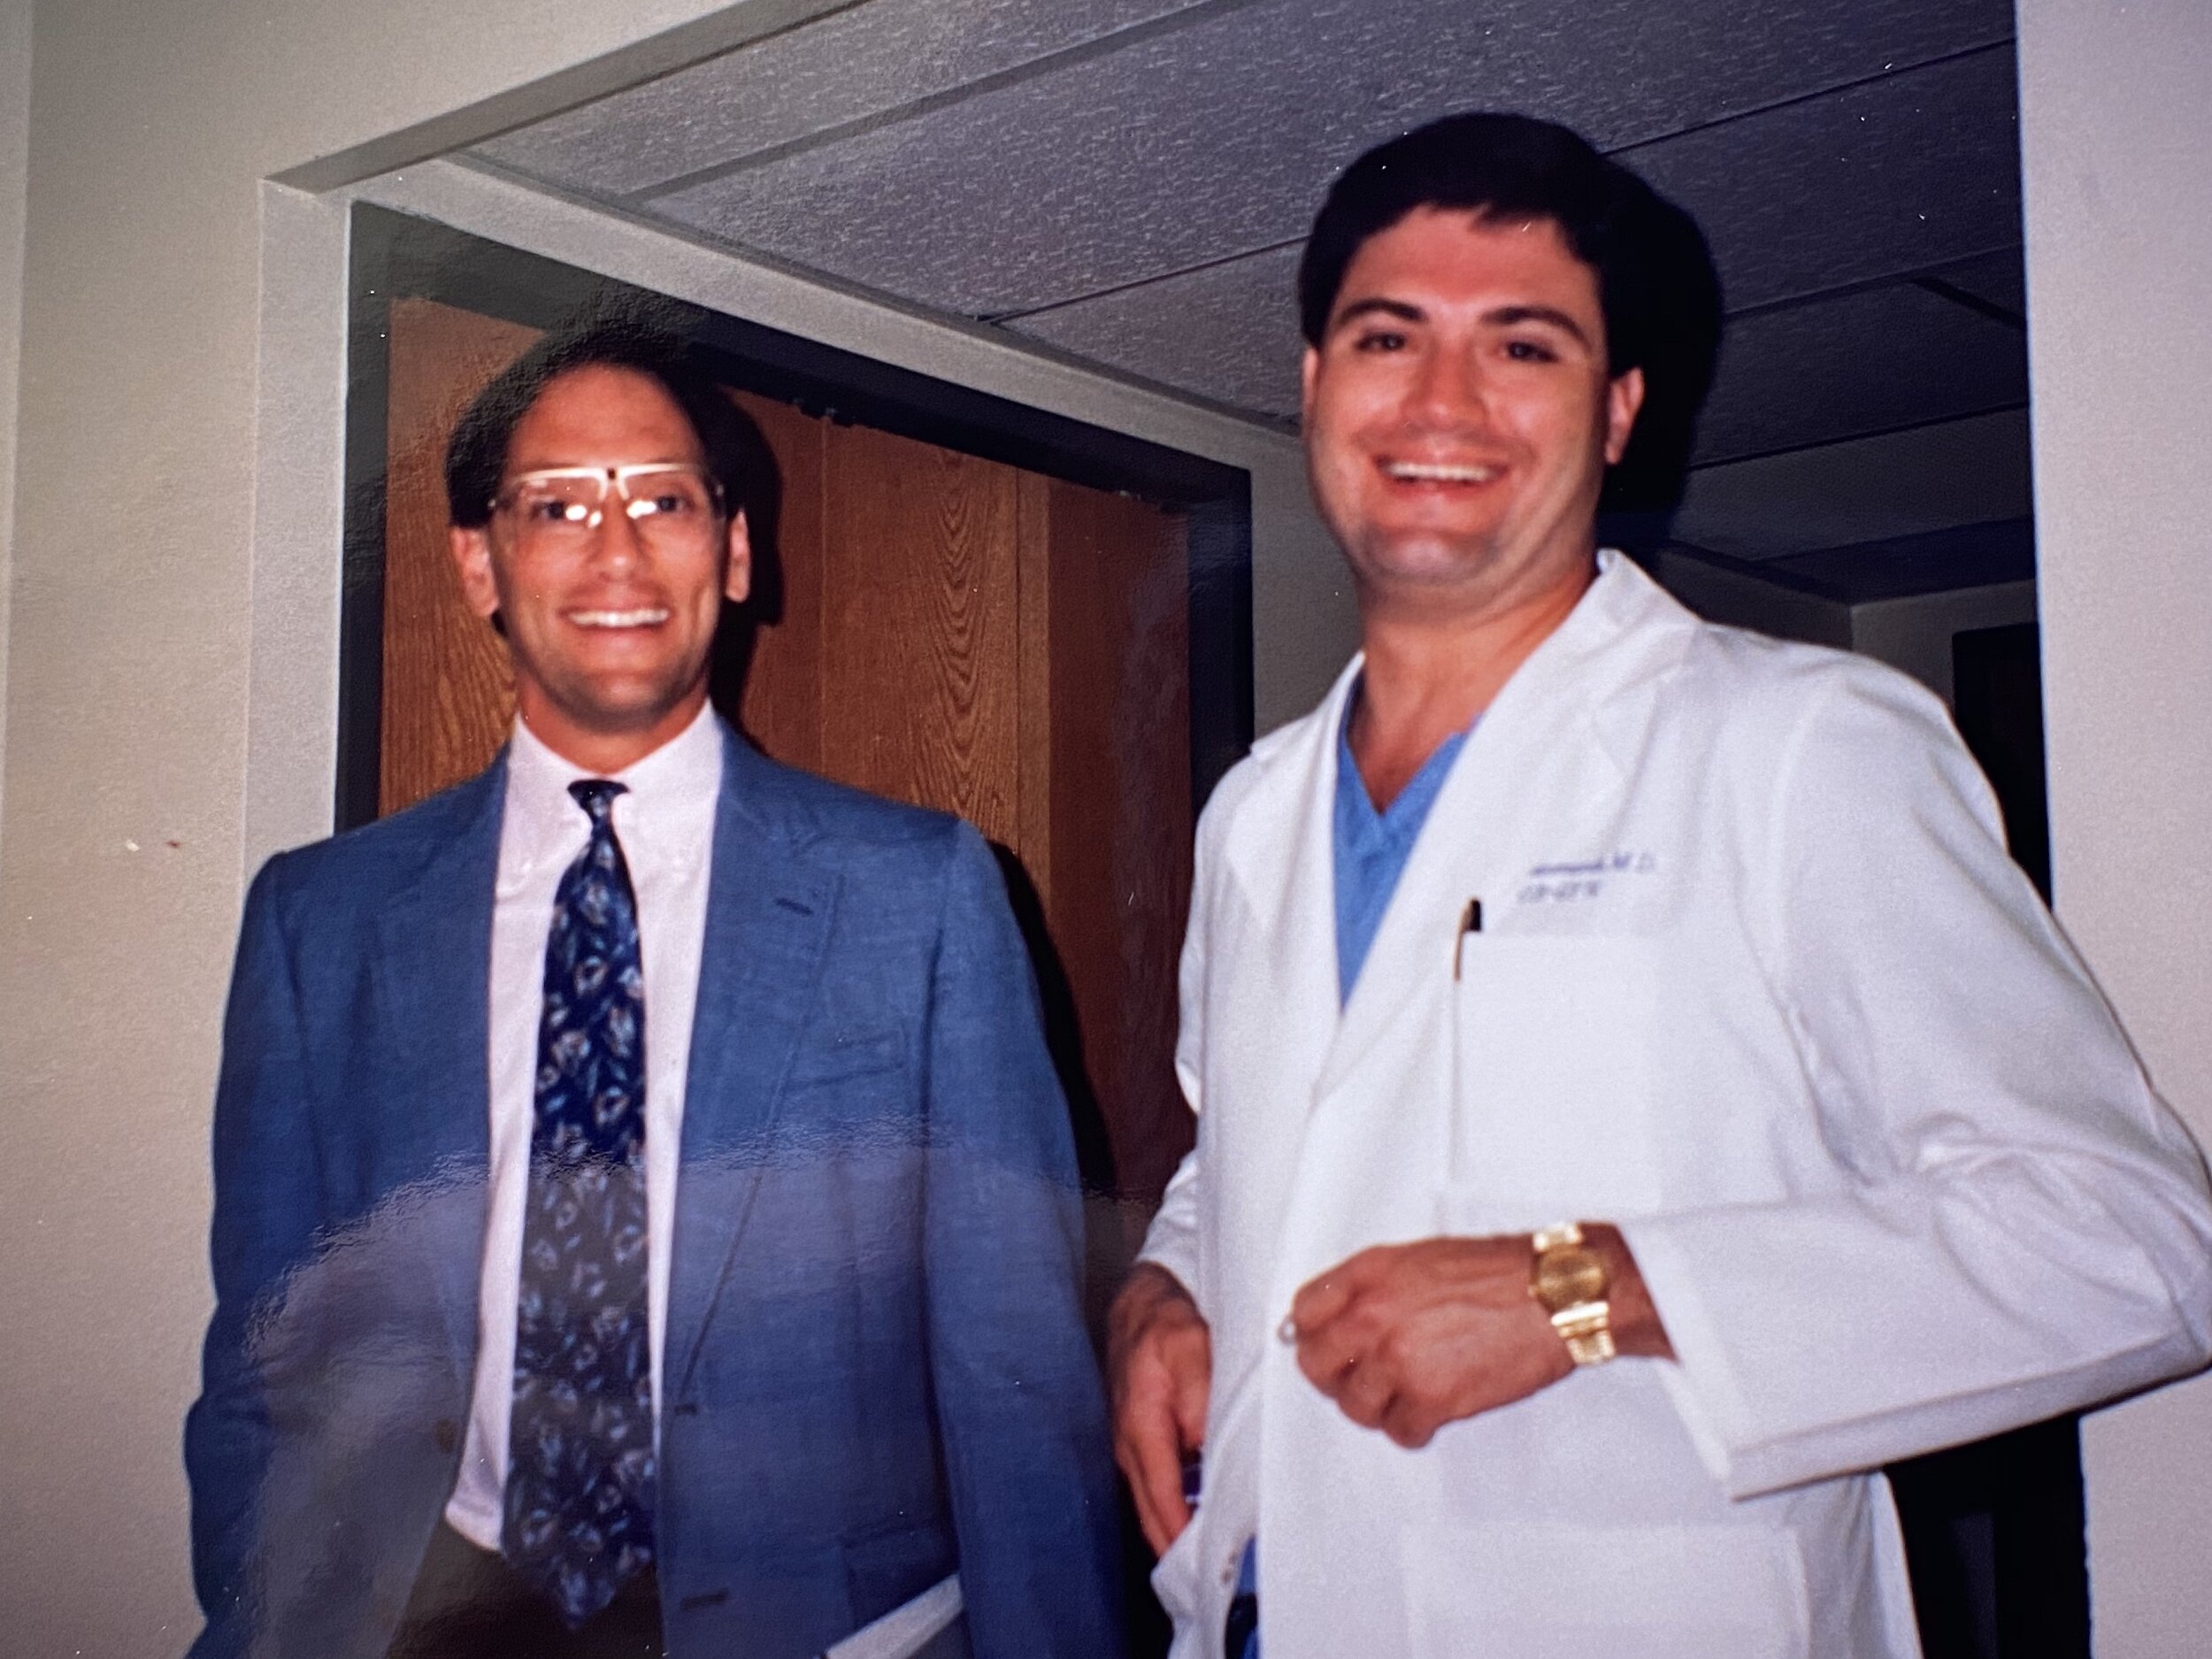 Dr. Staub (L) with Richard E. Reinmund, M.D. (R), 1991